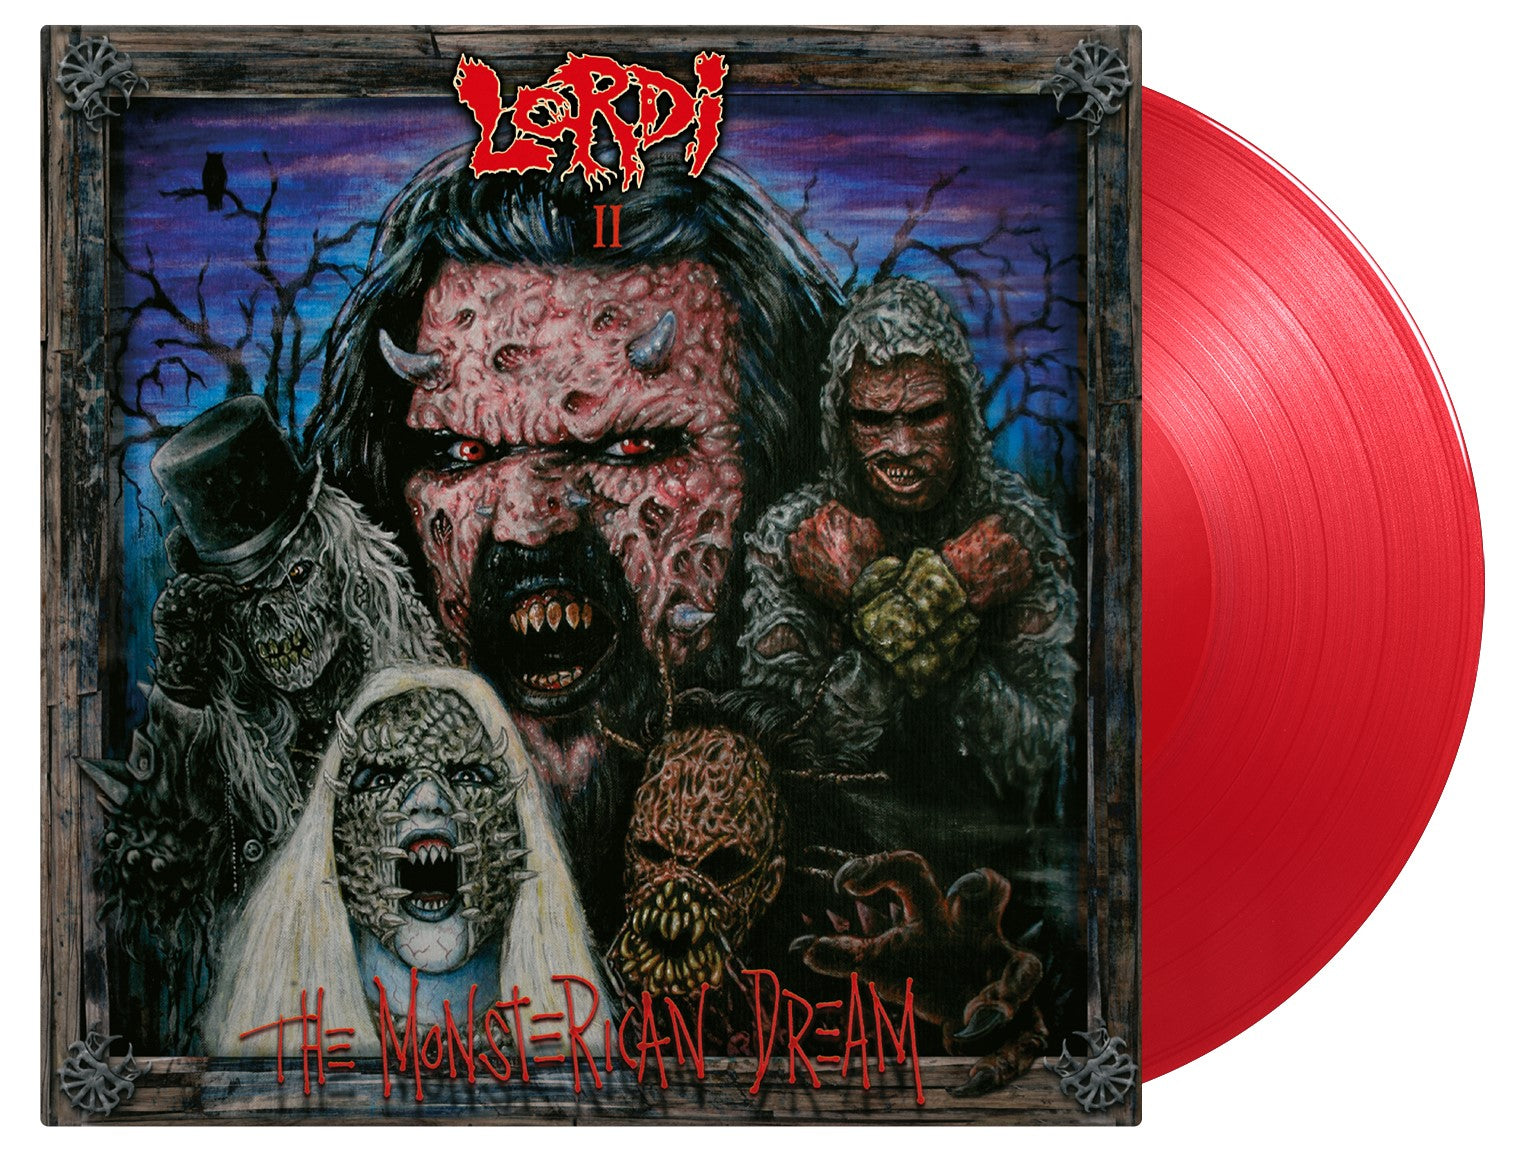 The Monsterican Dream: Limited Translucent Vinyl LP